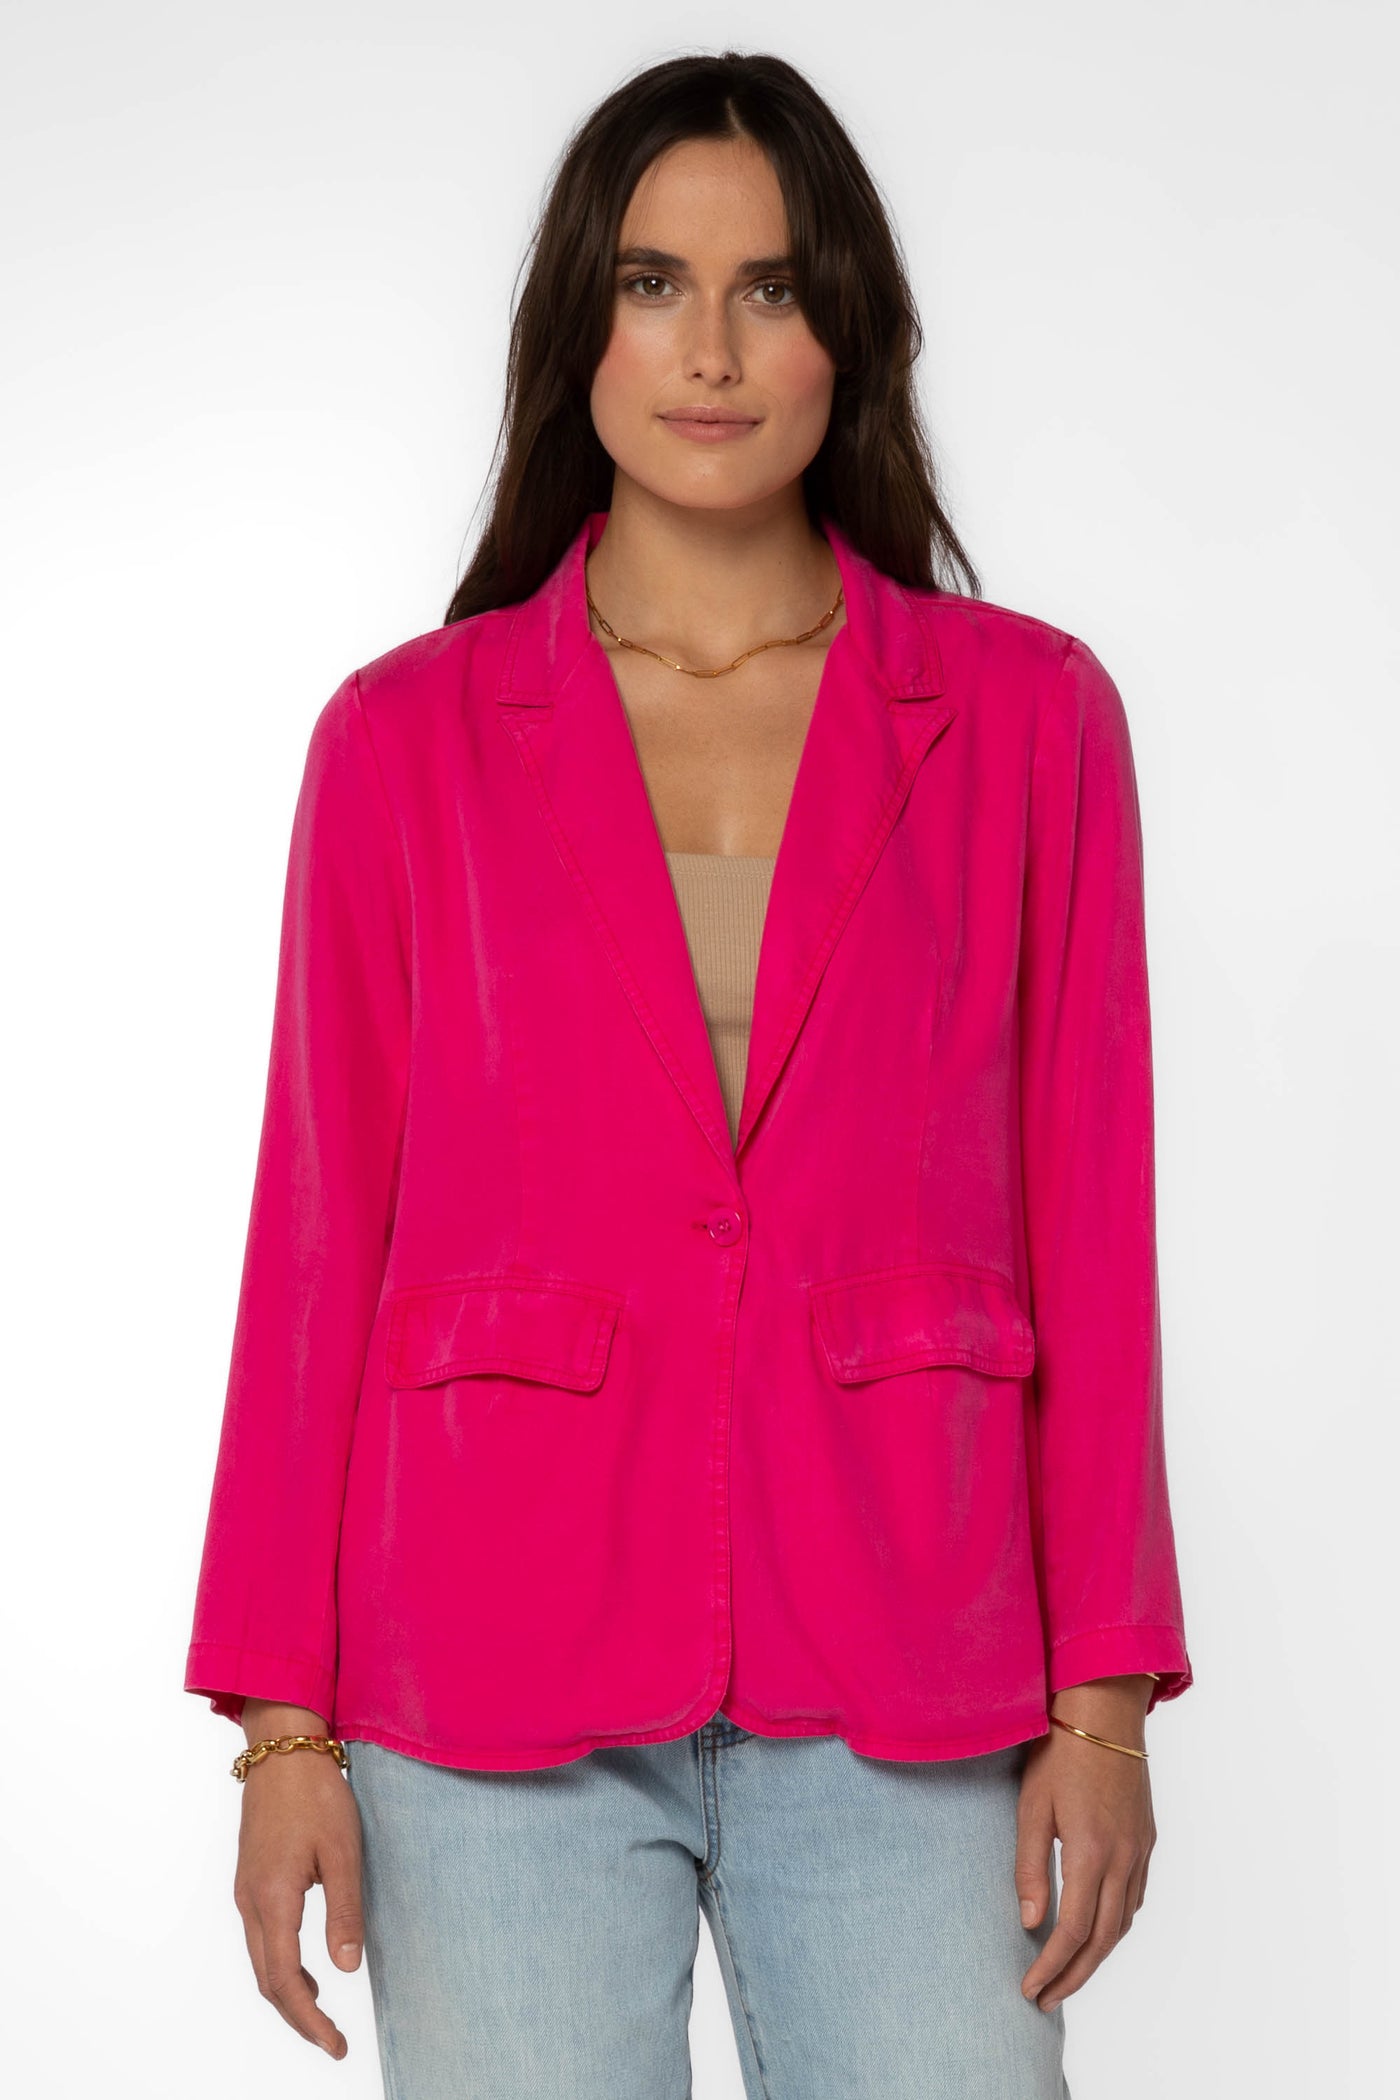 Patty Hot Pink Blazer - Jackets & Outerwear - Velvet Heart Clothing